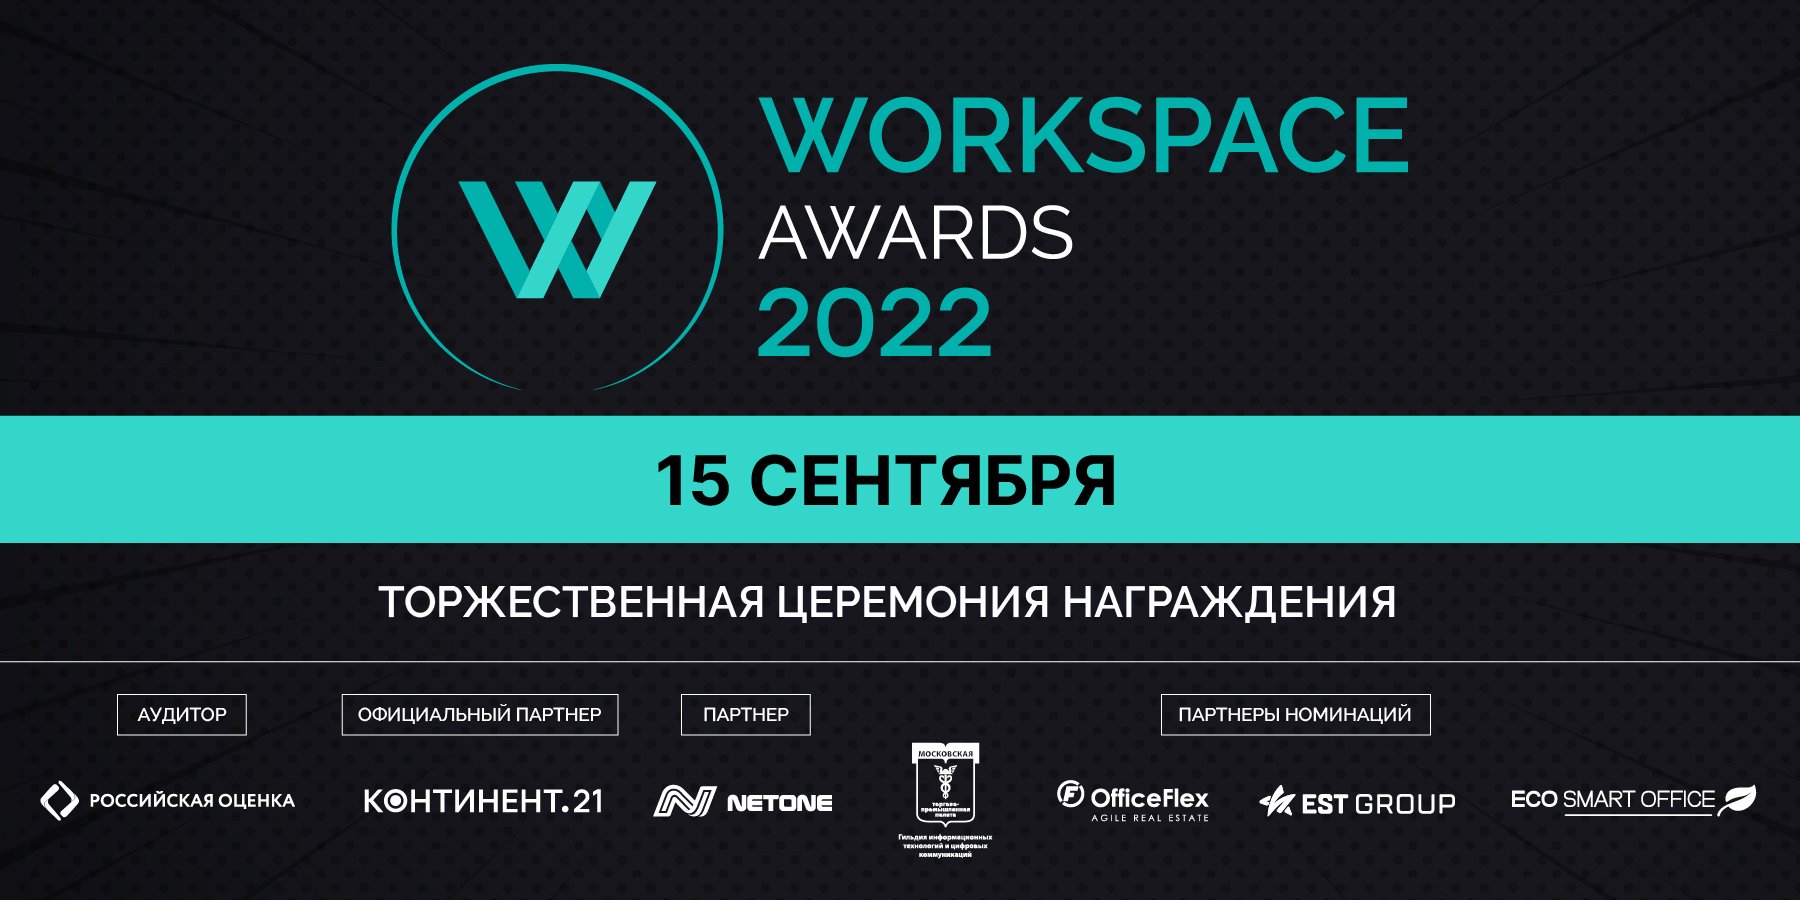 Workspace Awards 2022